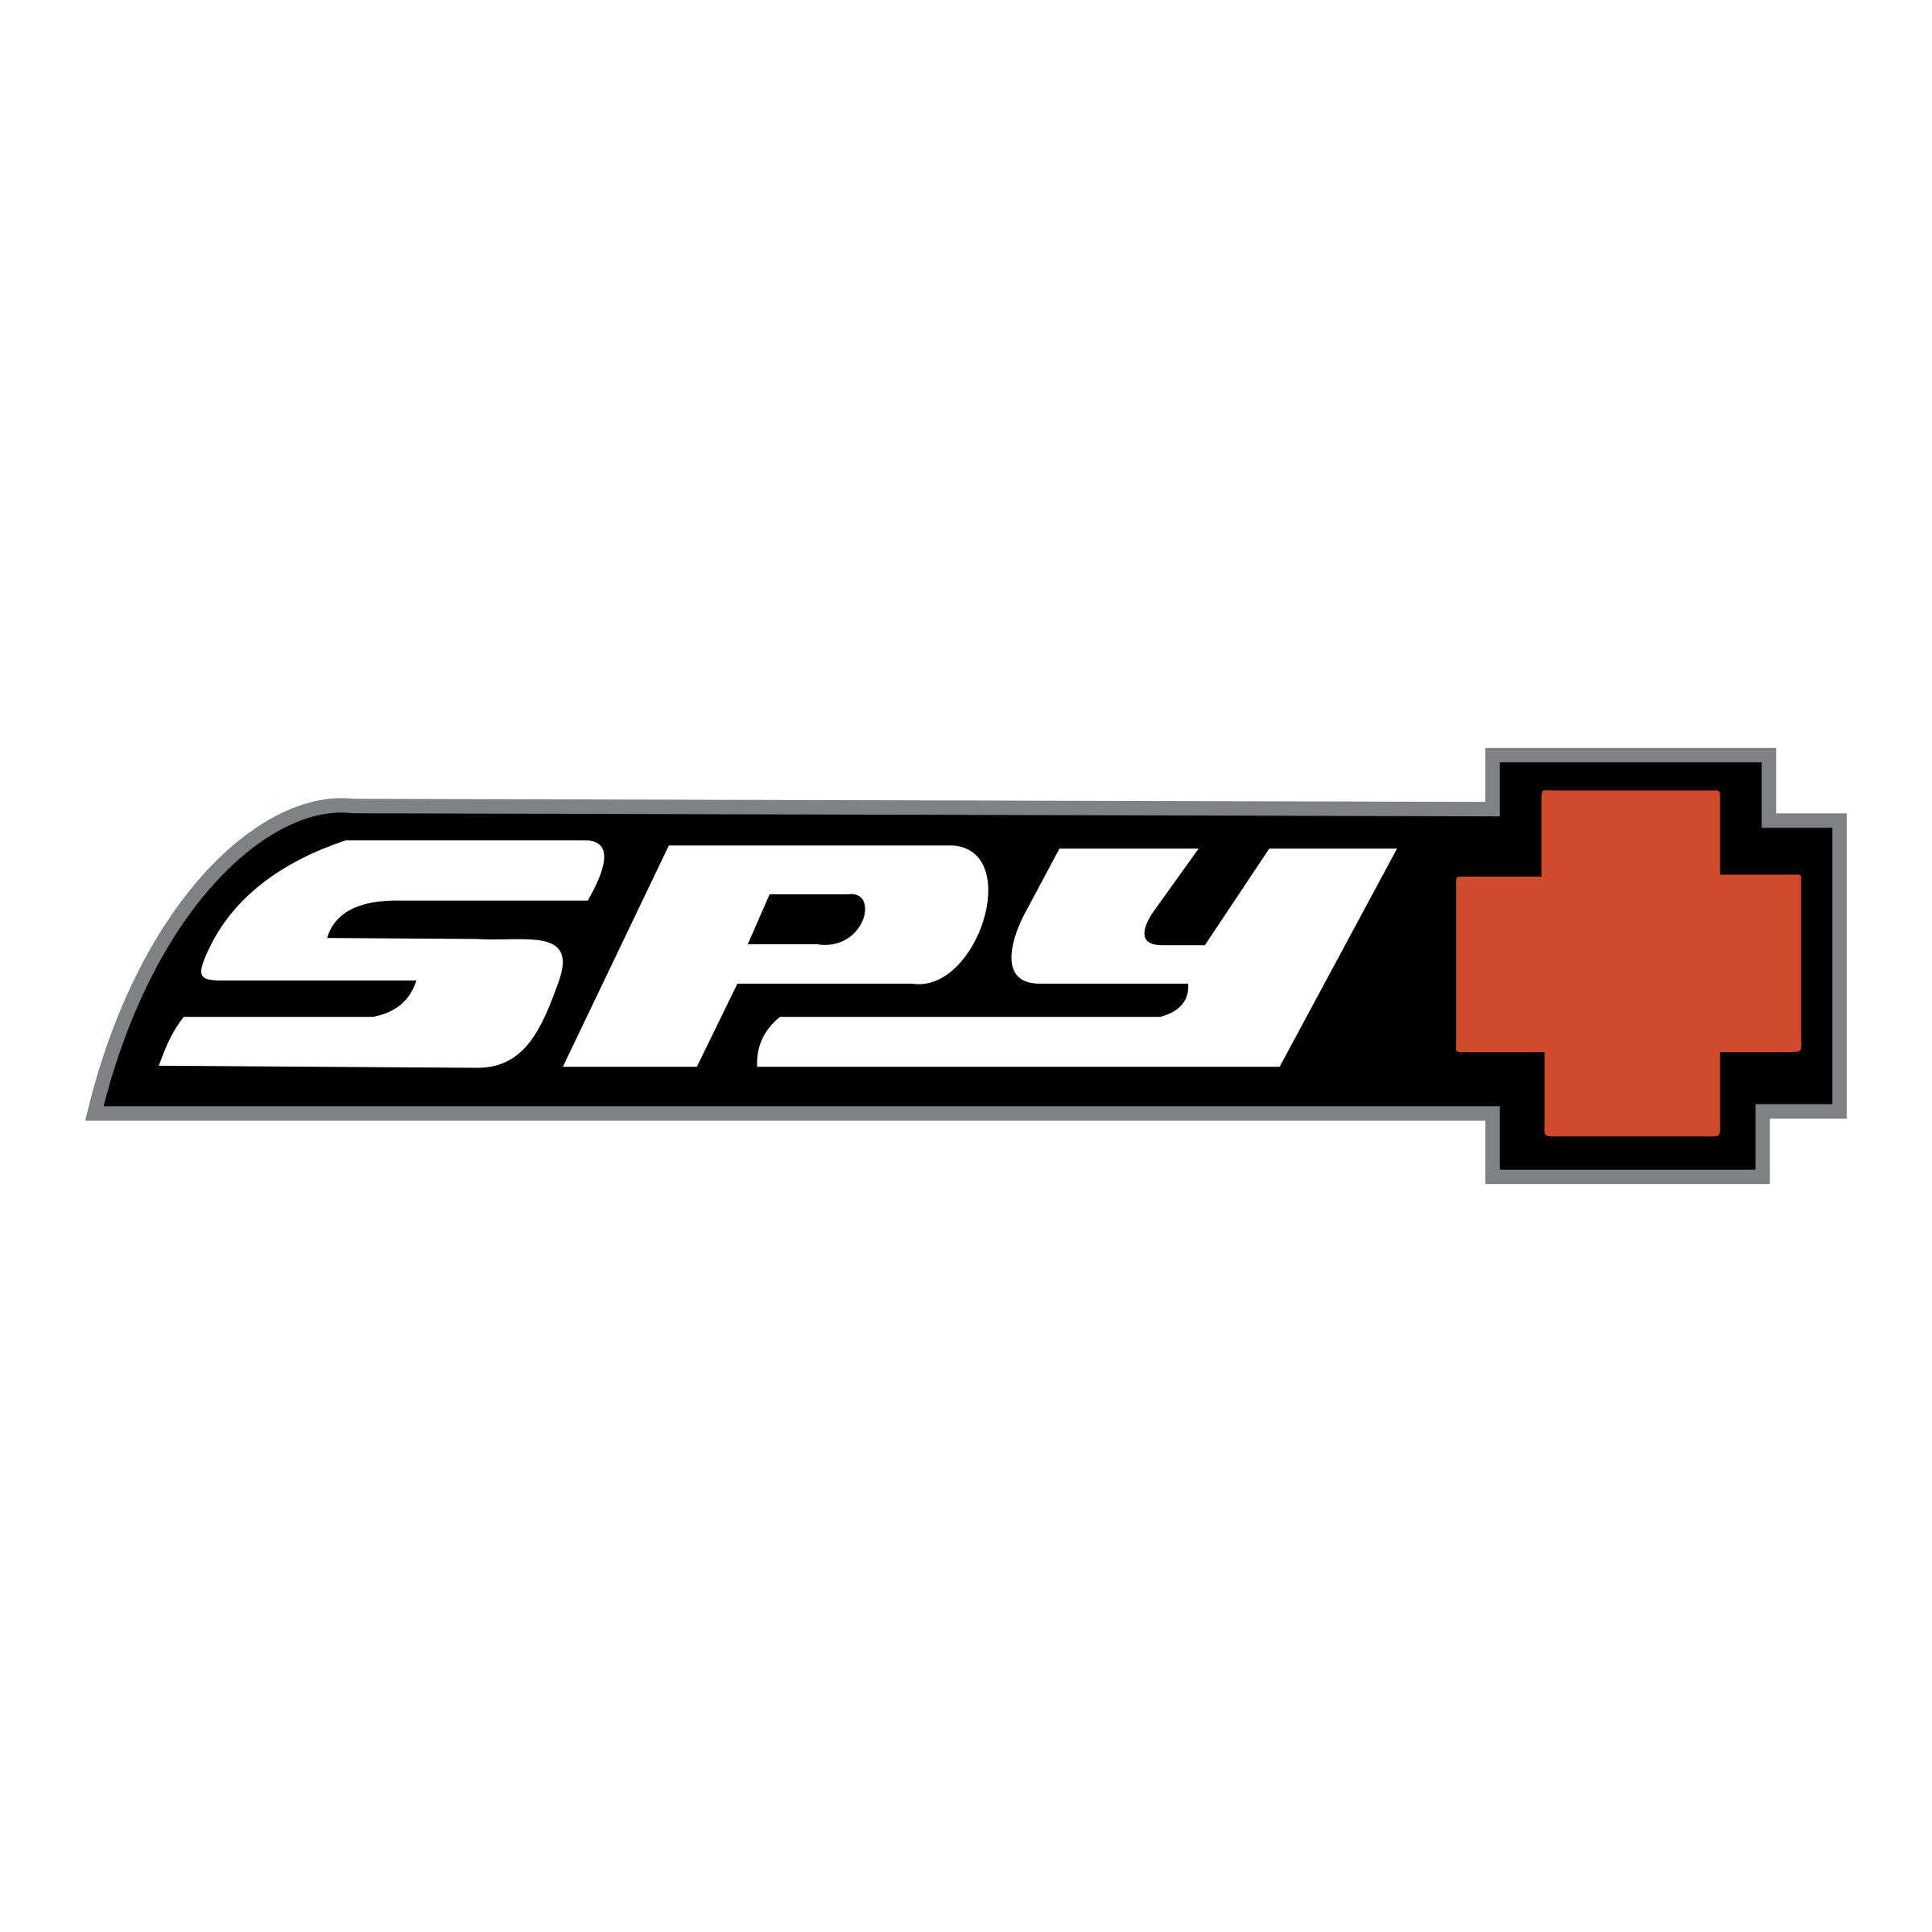 Spy Logo - Spy Logo PNG Transparent & SVG Vector - Freebie Supply